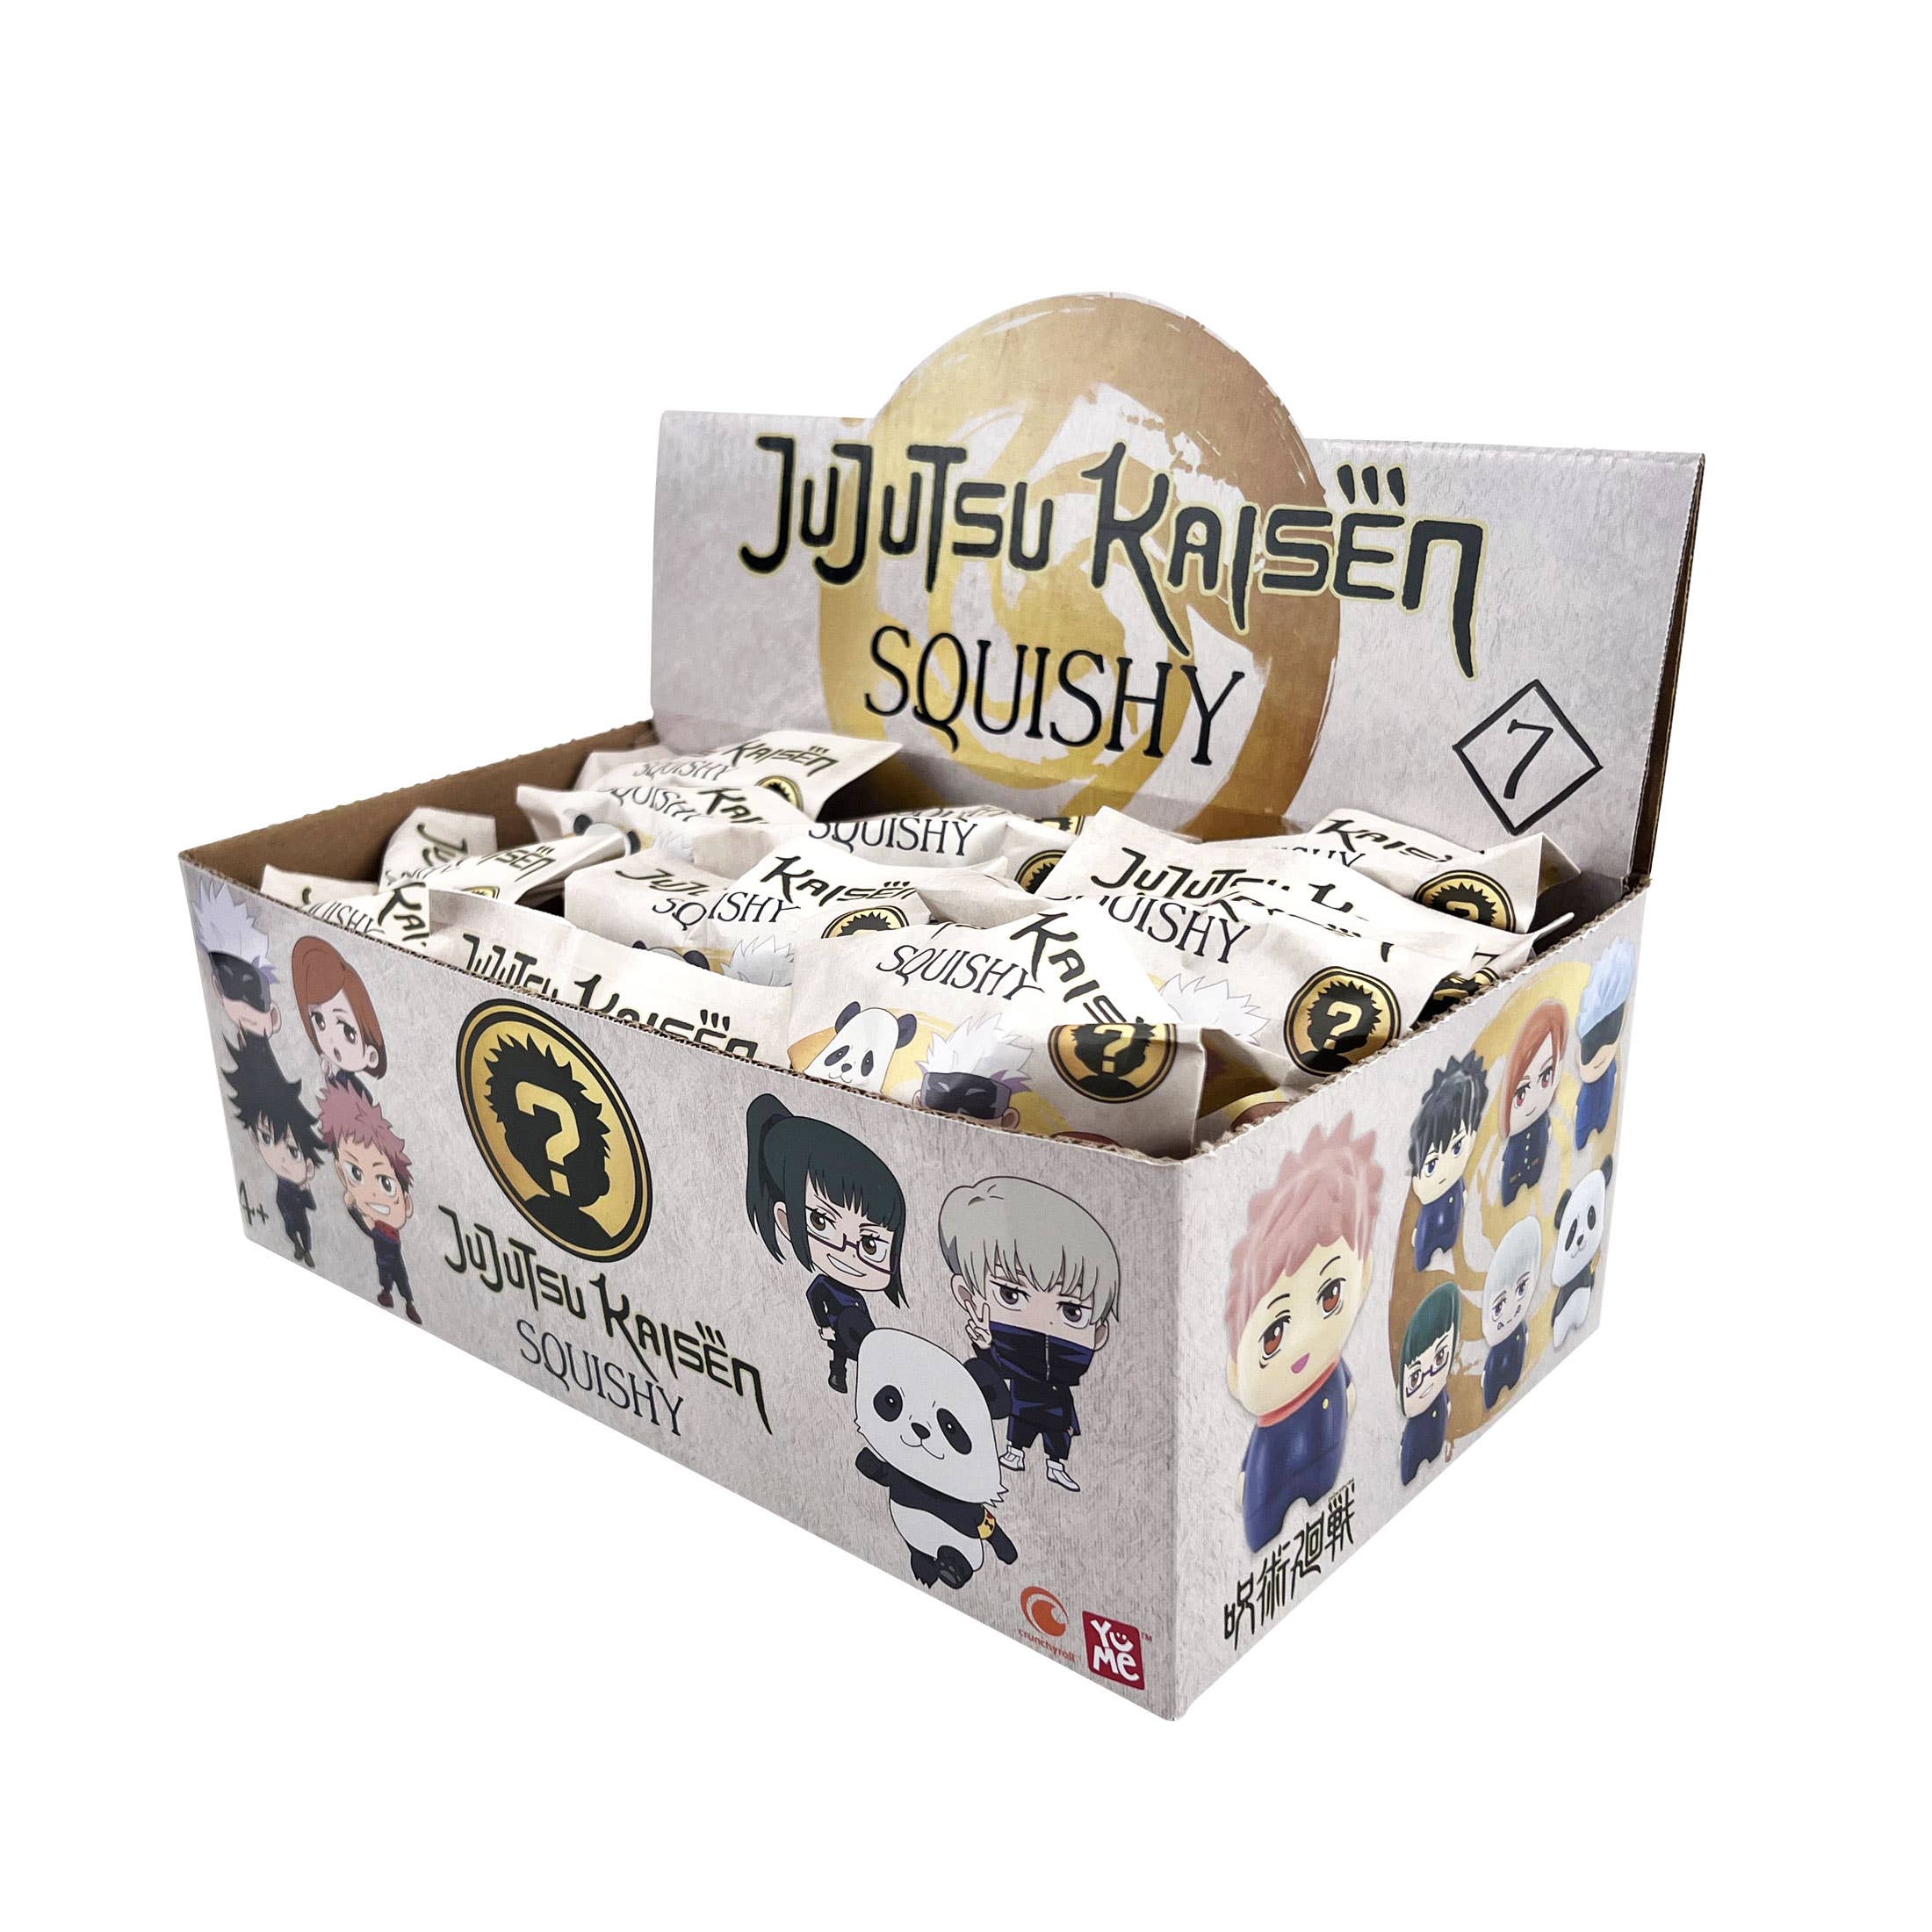  YuMe Toys Official Crunchyroll Jujutsu Kaisen Mystery Capsules  Blind Box Collectible for Anime Lovers - Yuji, Megumi, Nobara, Satoru JJK  Manga Movie Merch 2 Pack : Toys & Games